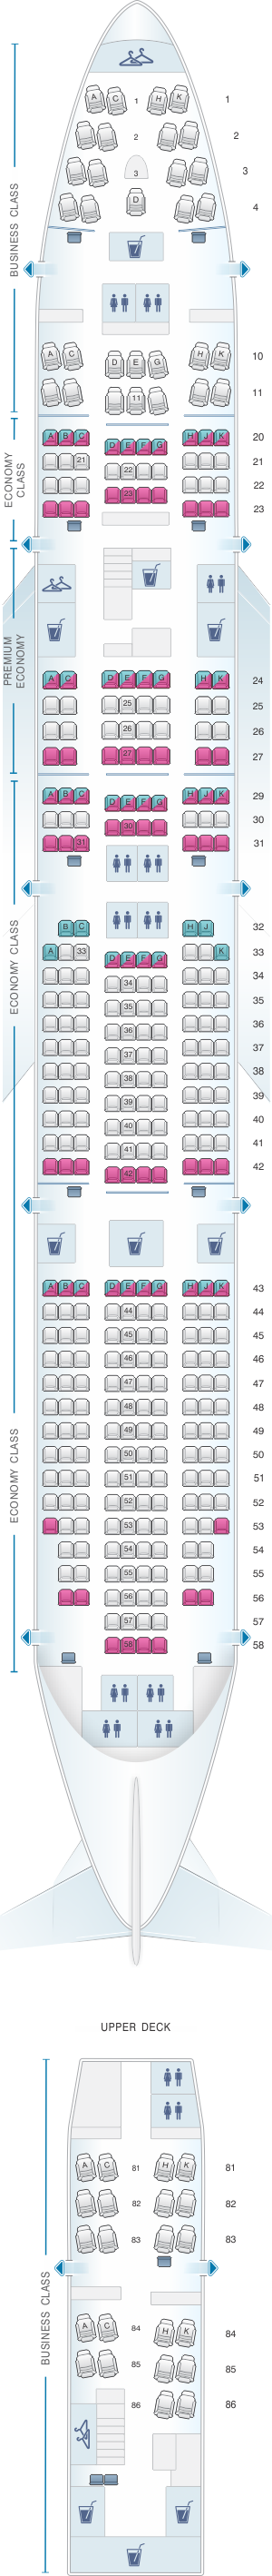 Seat map for Lufthansa Boeing B747 400 393pax